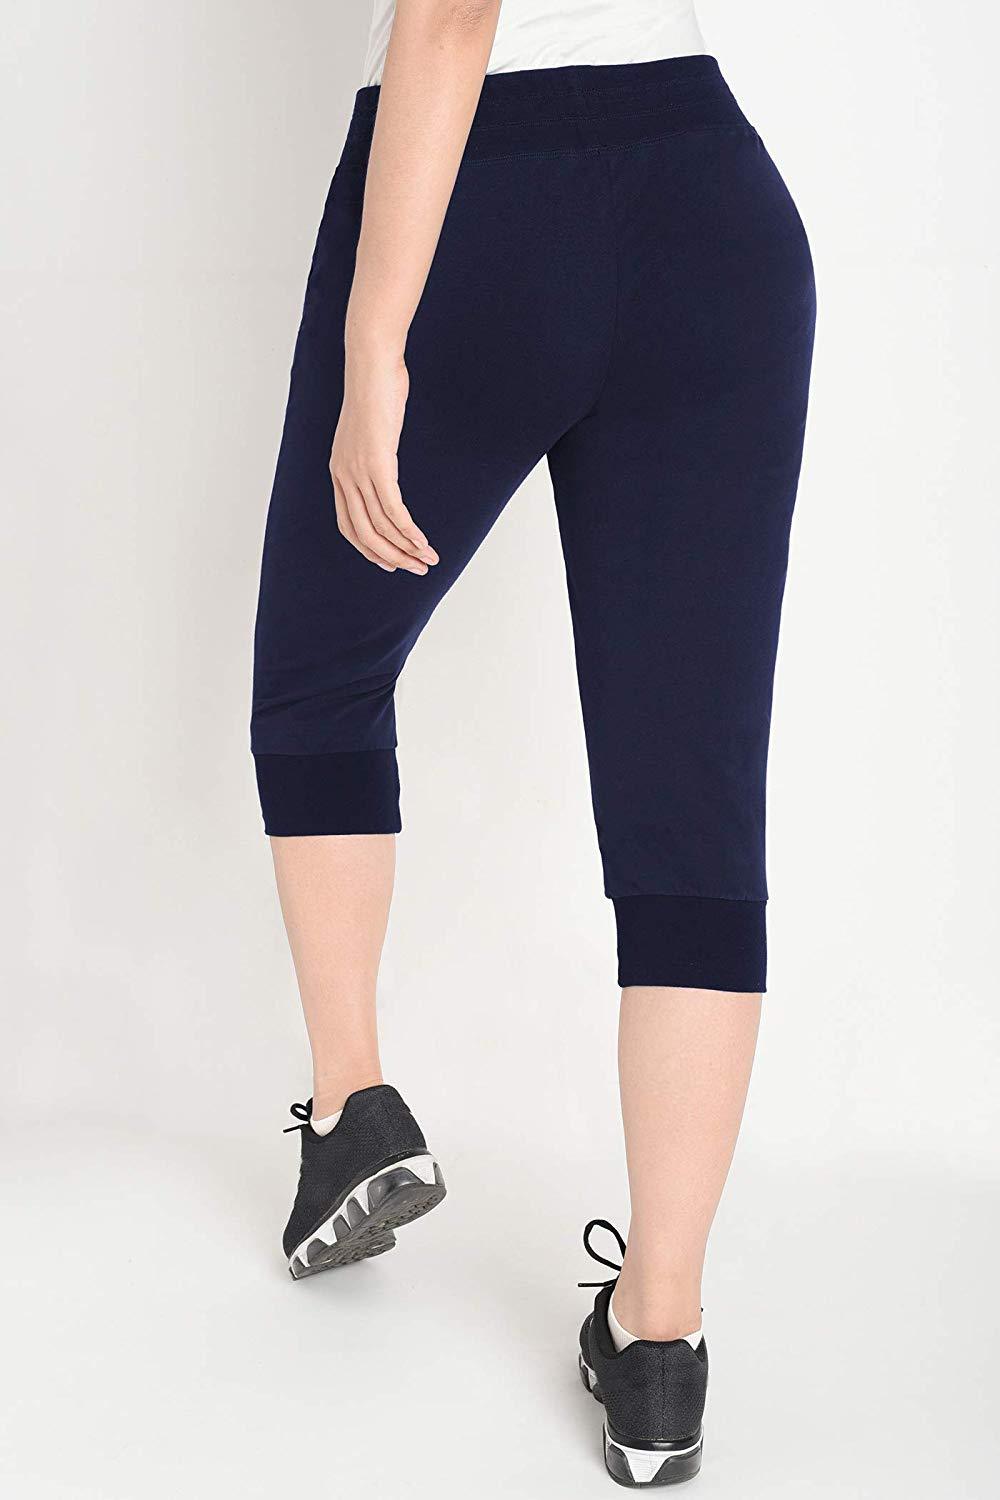 Women's Cotton Joggers Knit Capri Pants with Pockets – Latuza